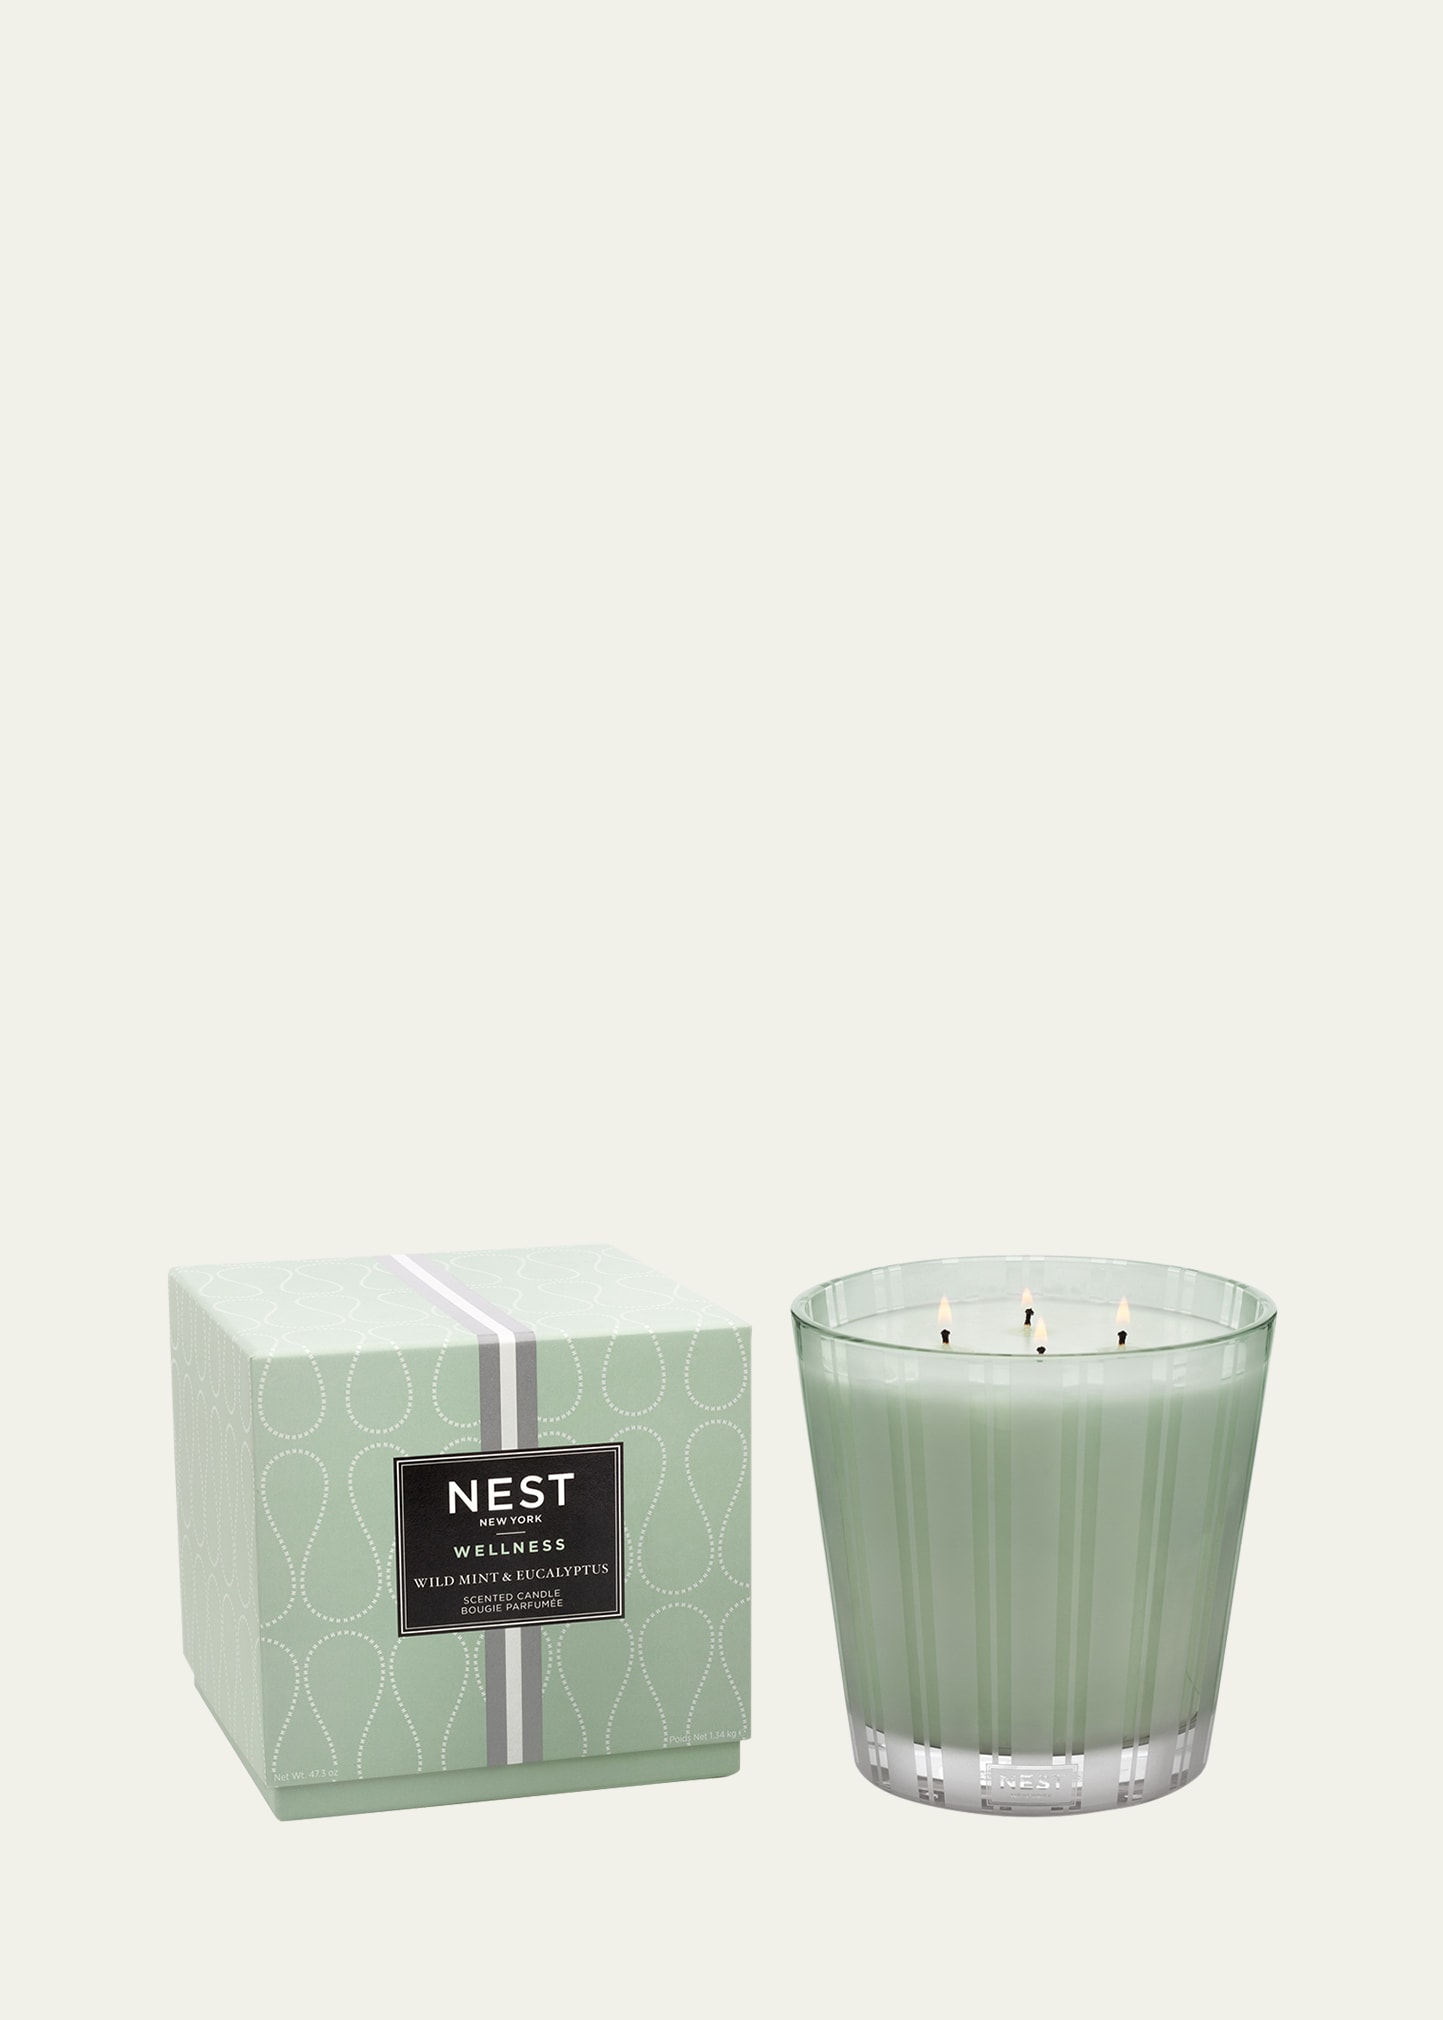 43.7 oz. Wild Mint & Eucalyptus Luxury Candle